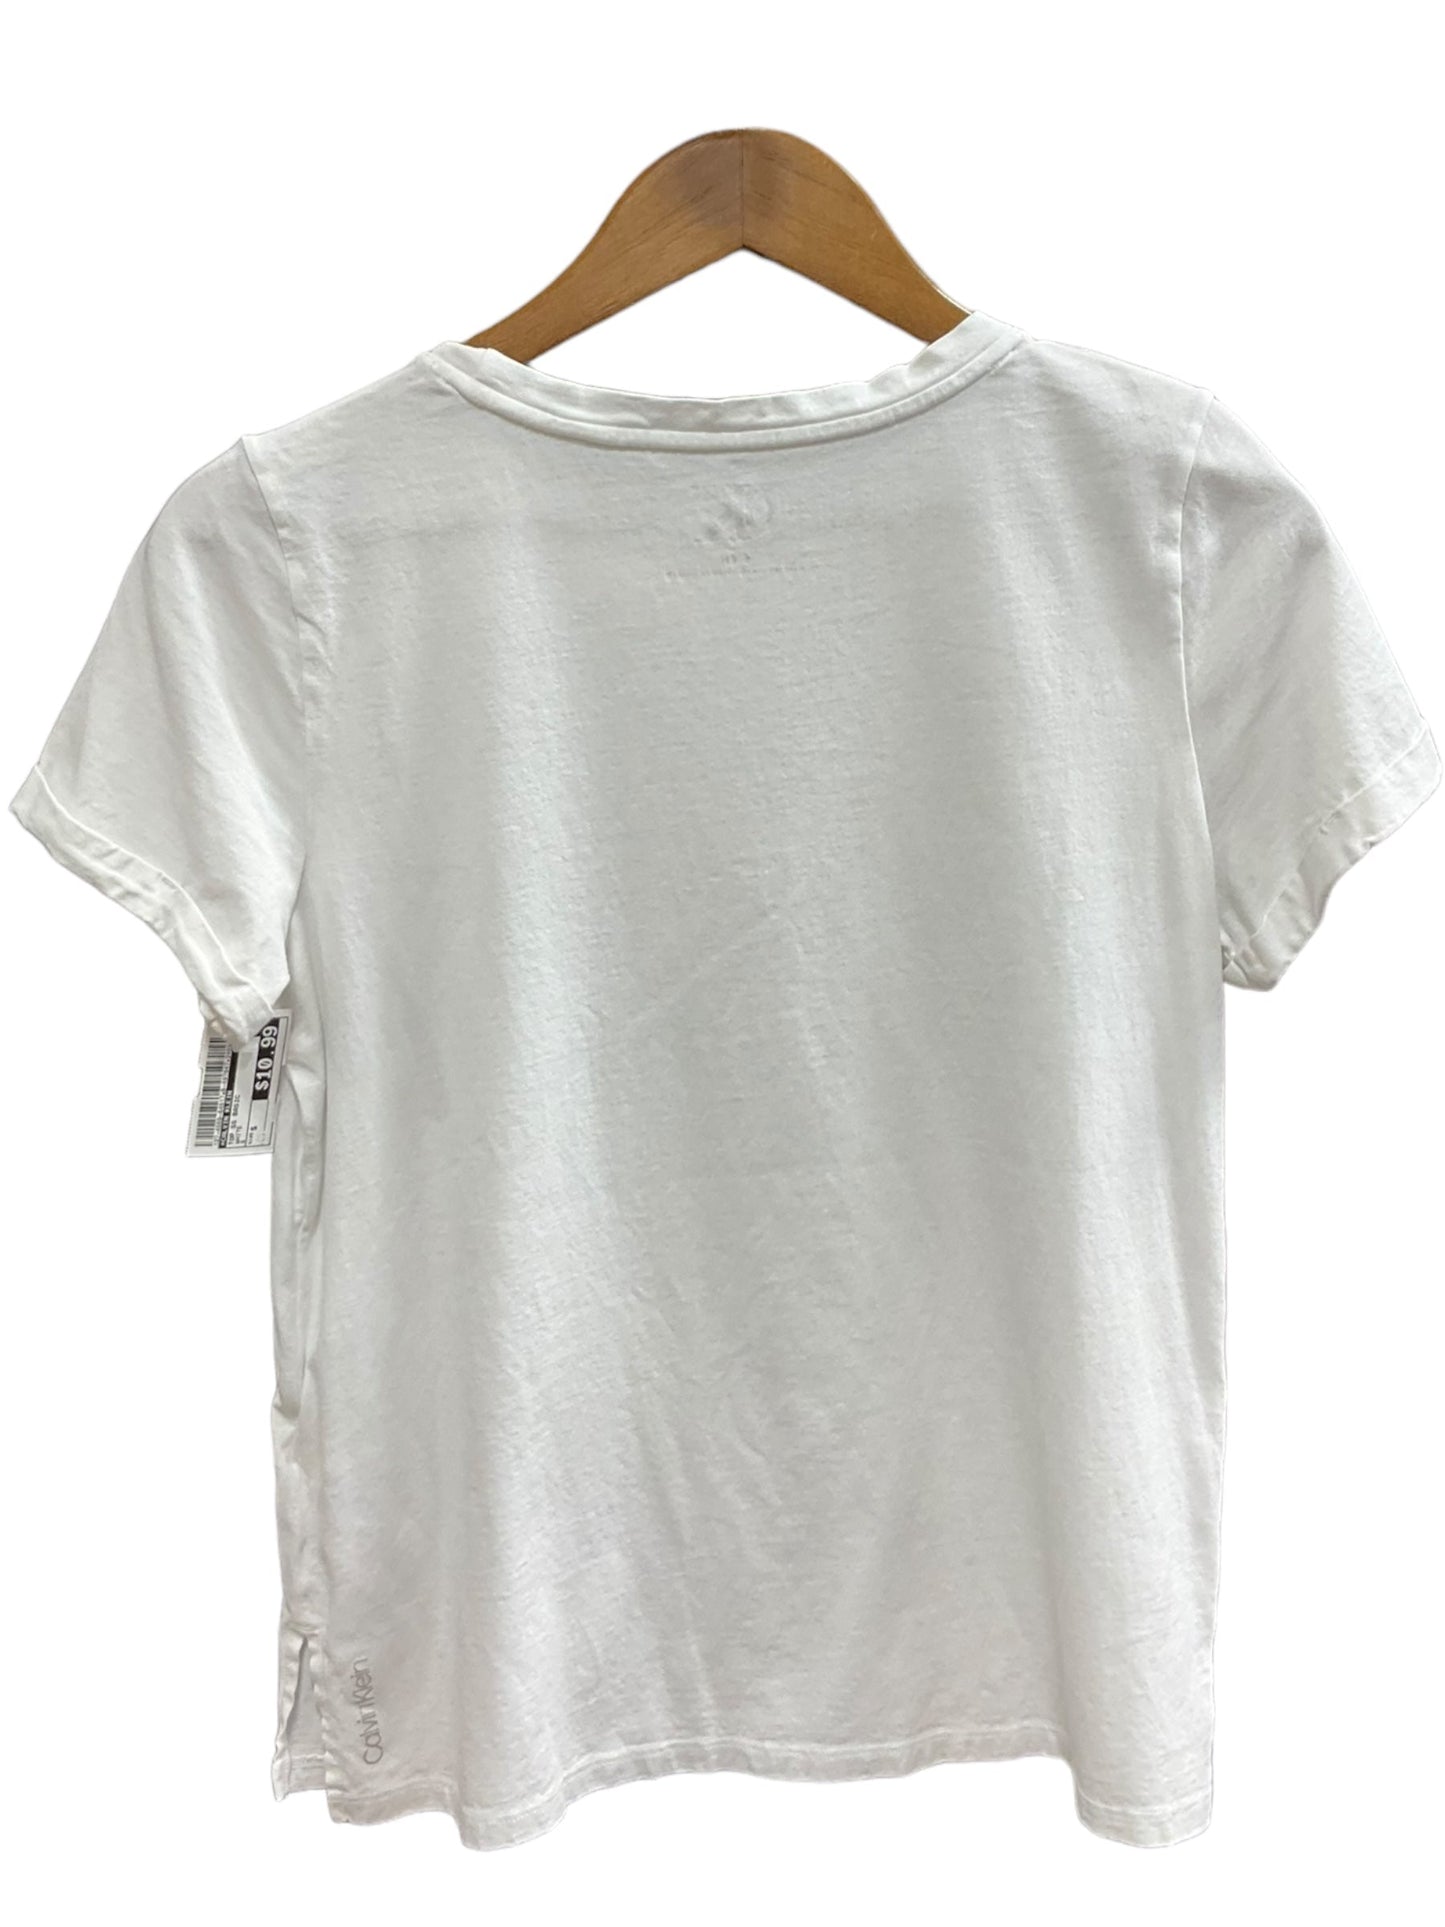 White Top Short Sleeve Basic Calvin Klein, Size S